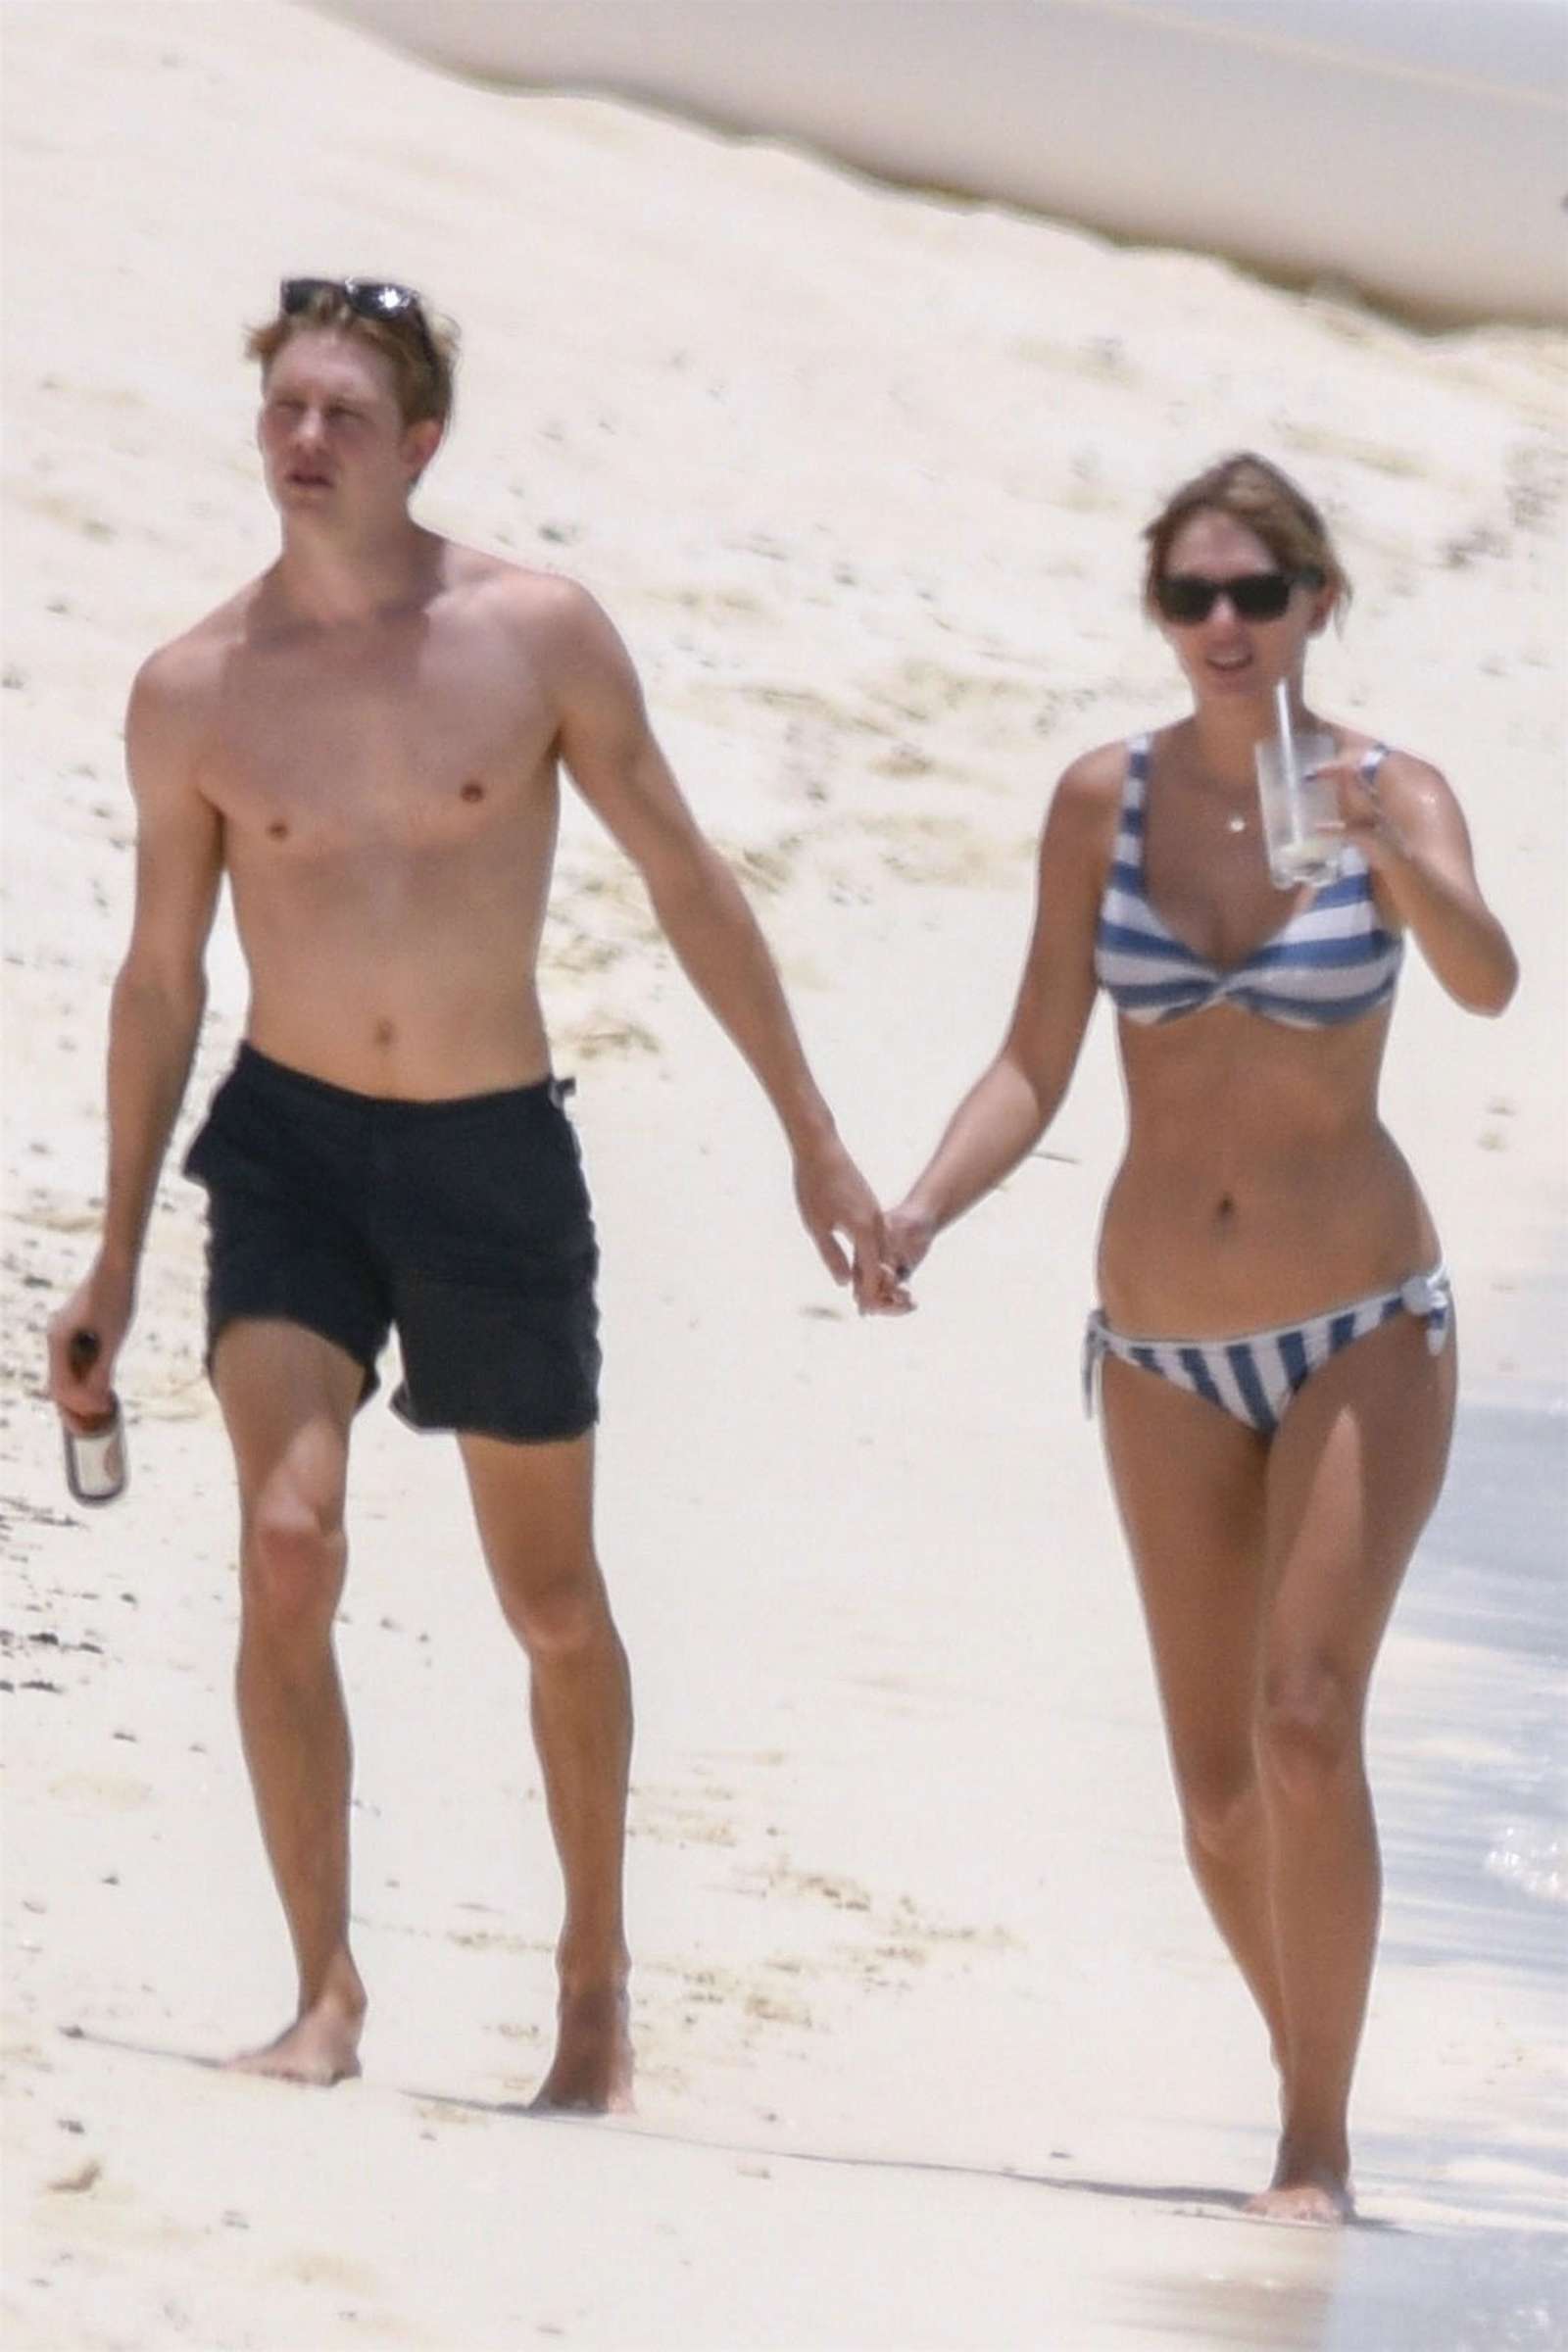 Taylor Swift in Bikini with her boyfriend Joe Alwyn at the beach in Turks and Caicos